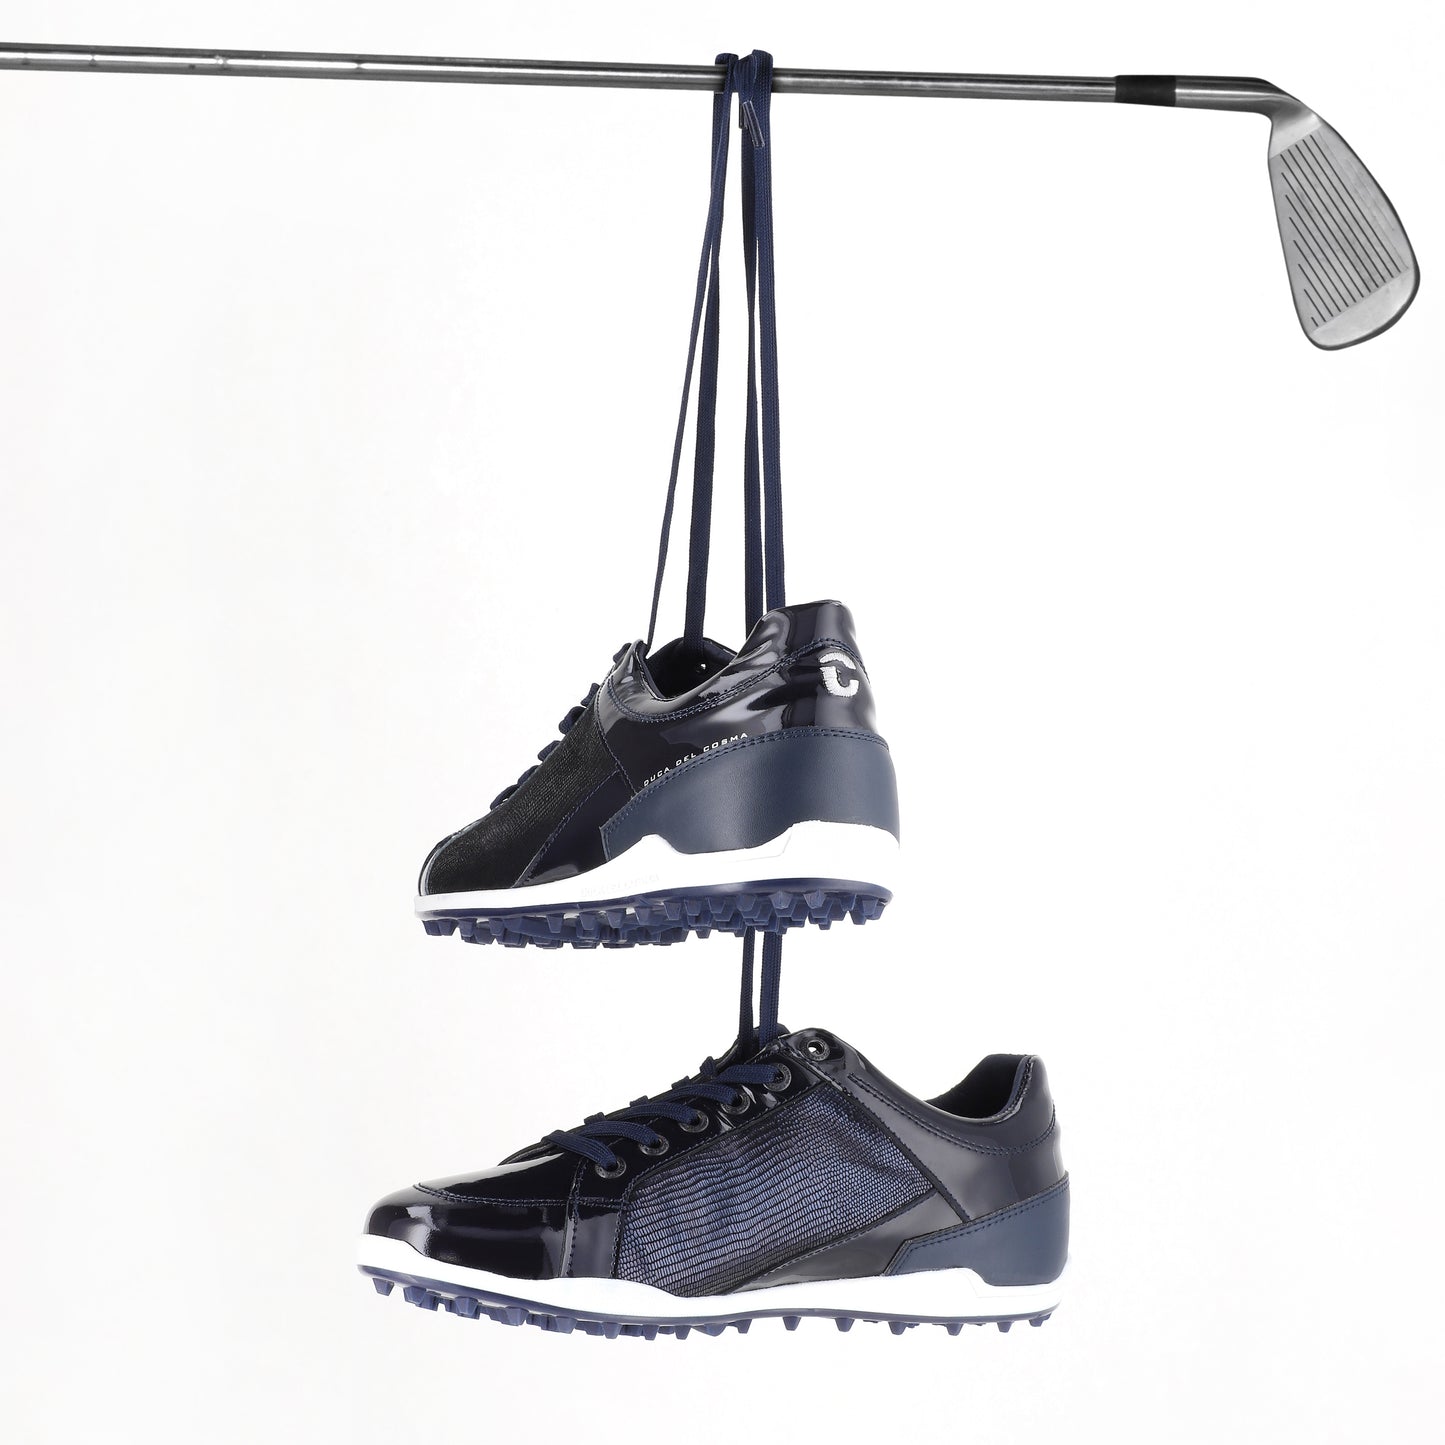 Caldes Navy - Women's Golf Shoe